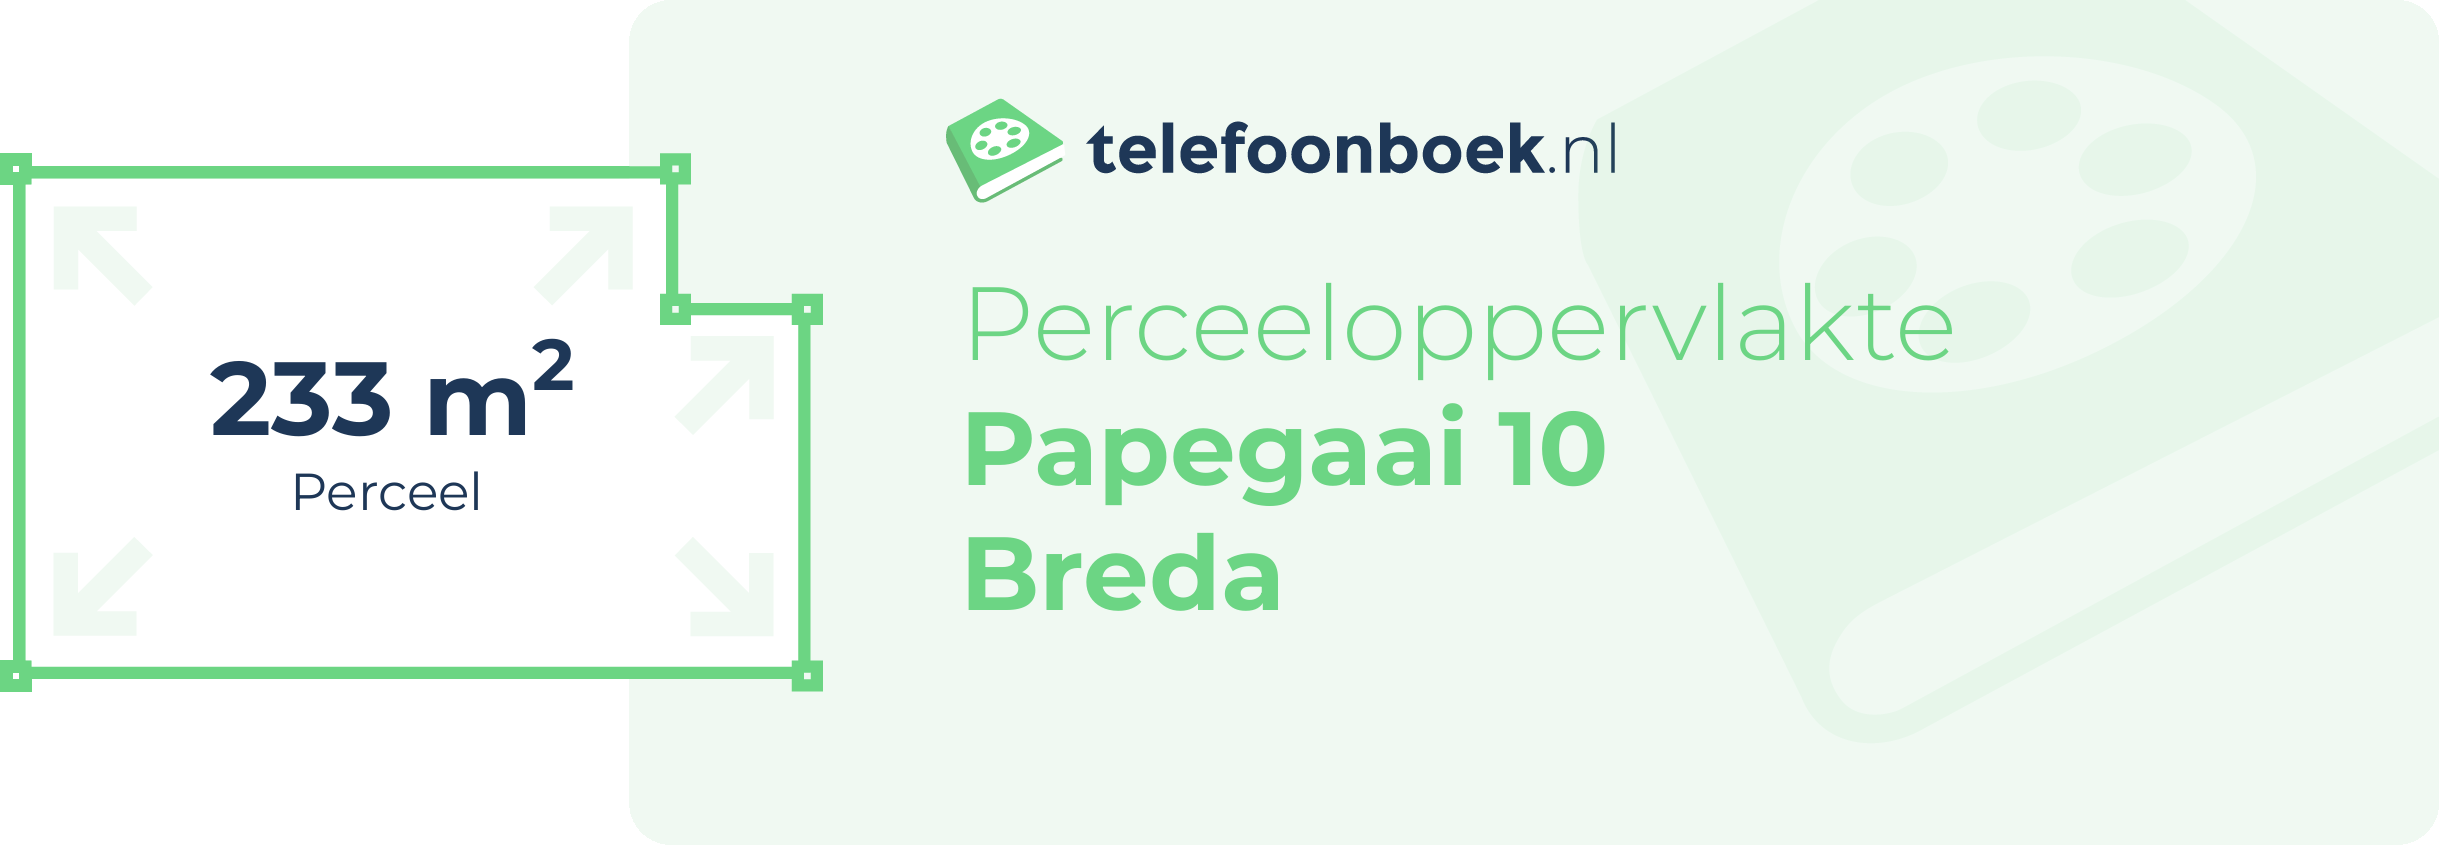 Perceeloppervlakte Papegaai 10 Breda